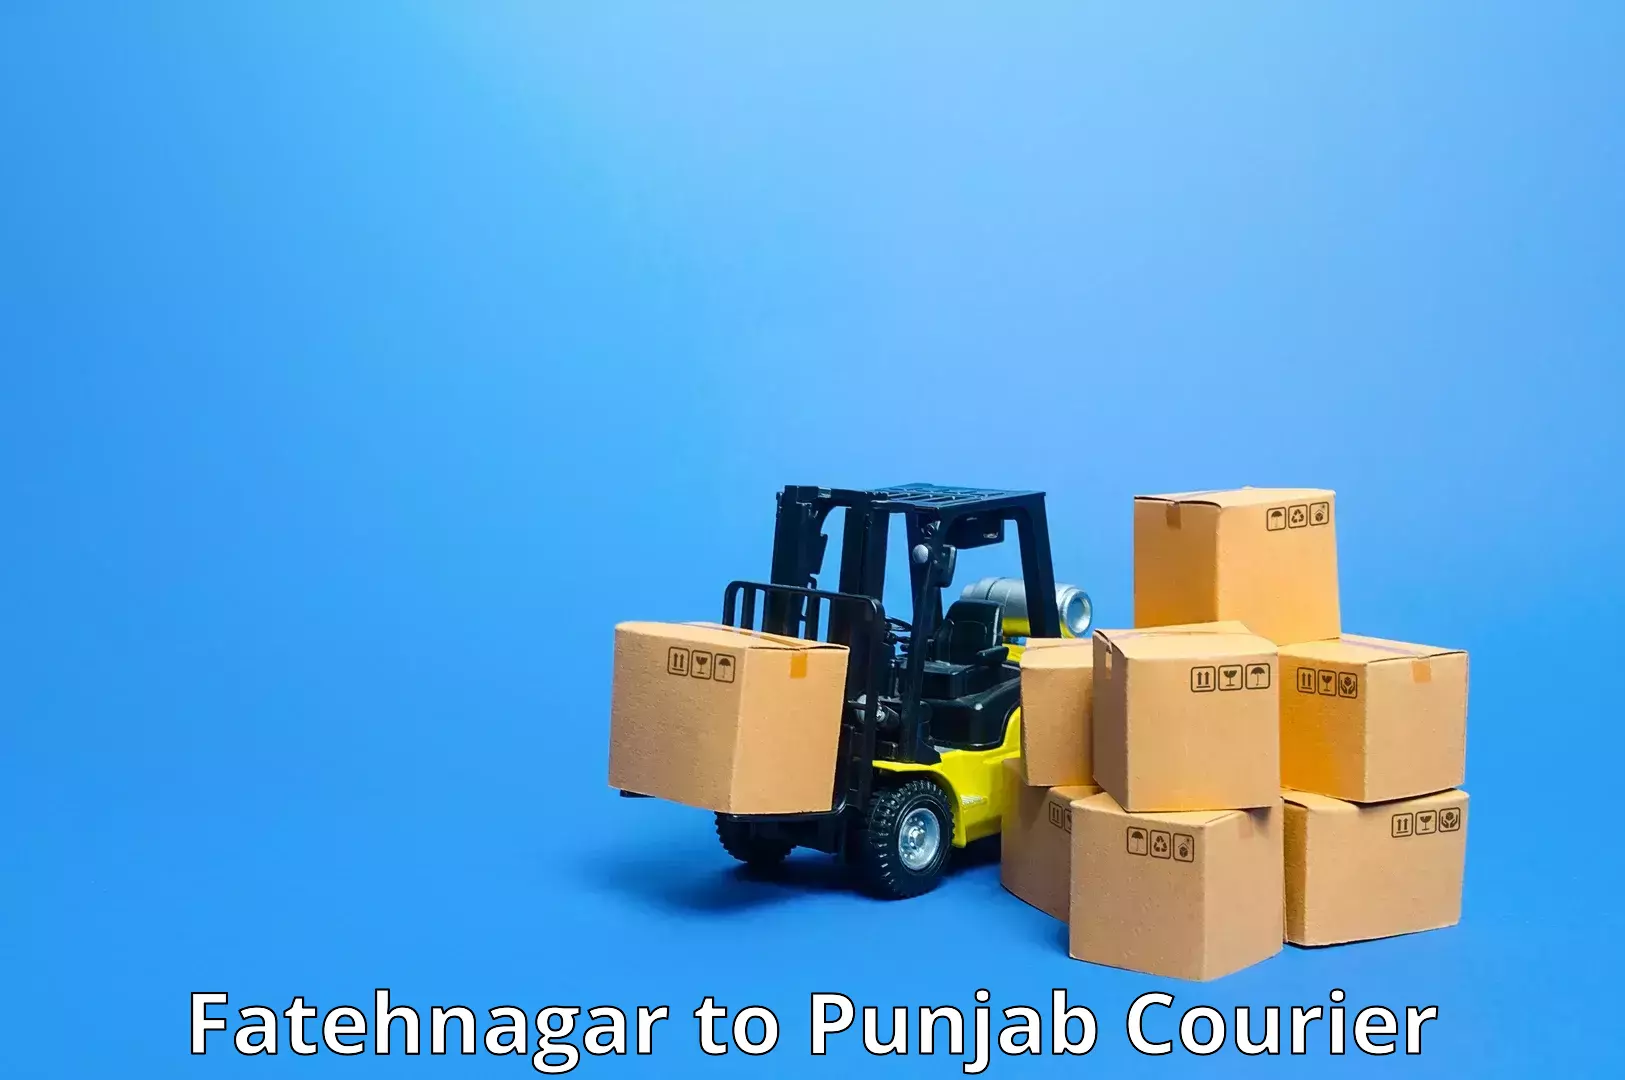 Reliable delivery network Fatehnagar to Fatehgarh Sahib